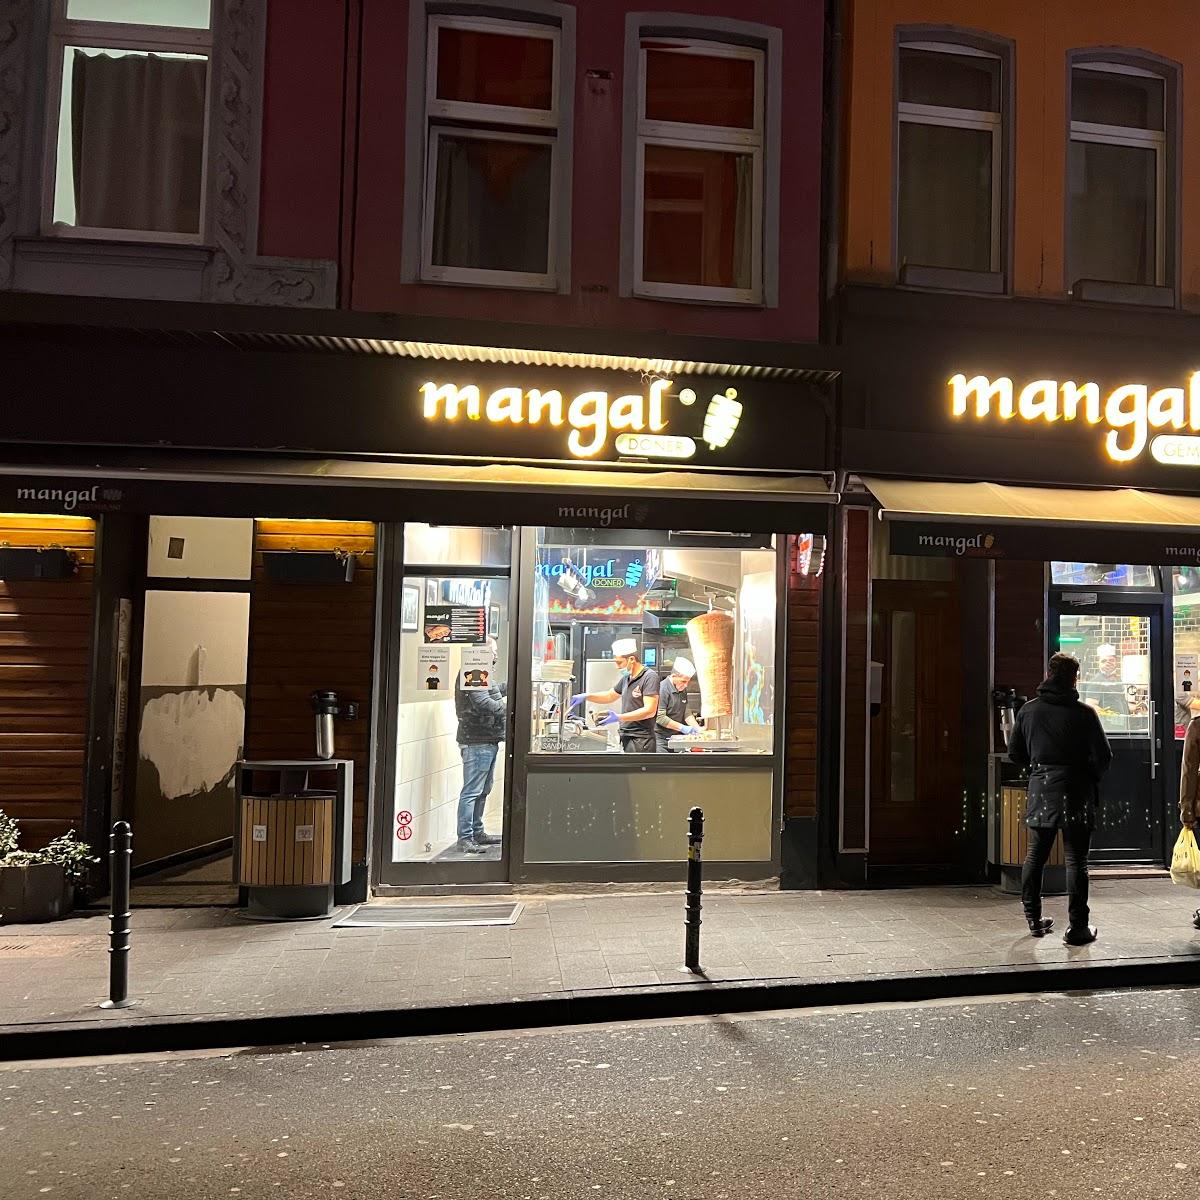 Restaurant "Mangal Döner Weidengasse" in Köln